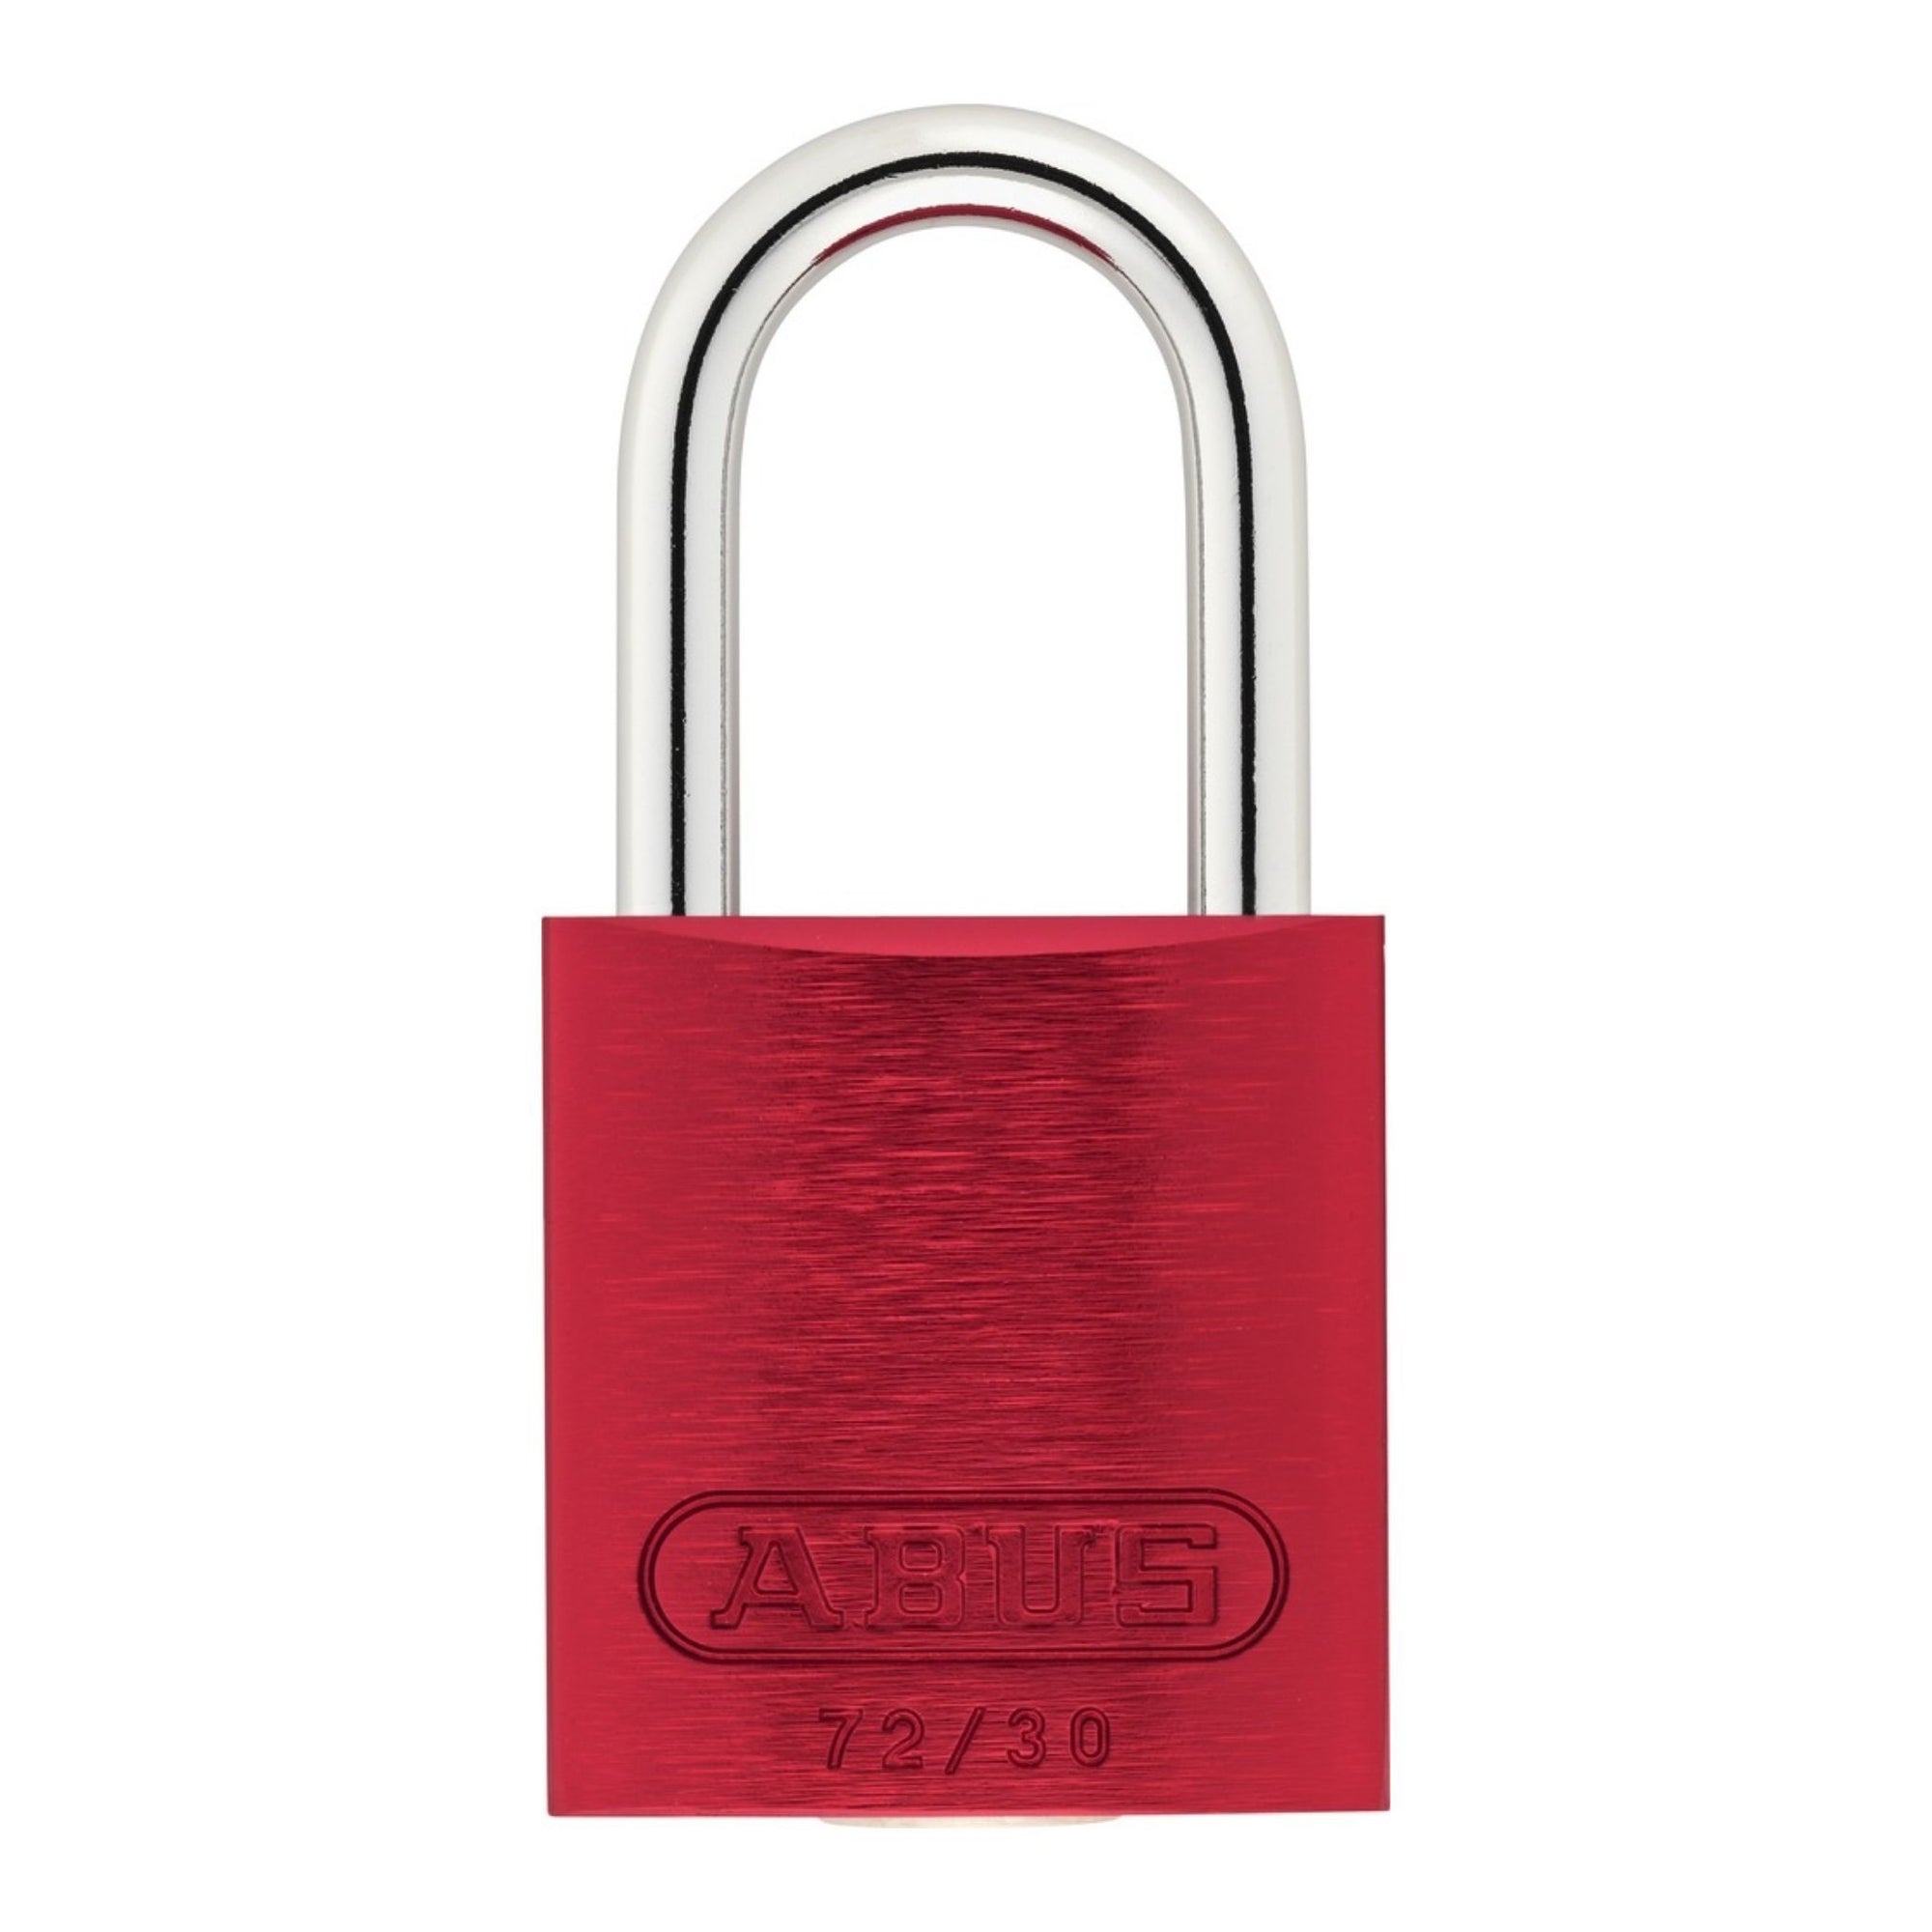 Abus 72/30 KA Red Aluminum Safety Padlock Keyed Alike Lockout Tagout Locks - The Lock Source